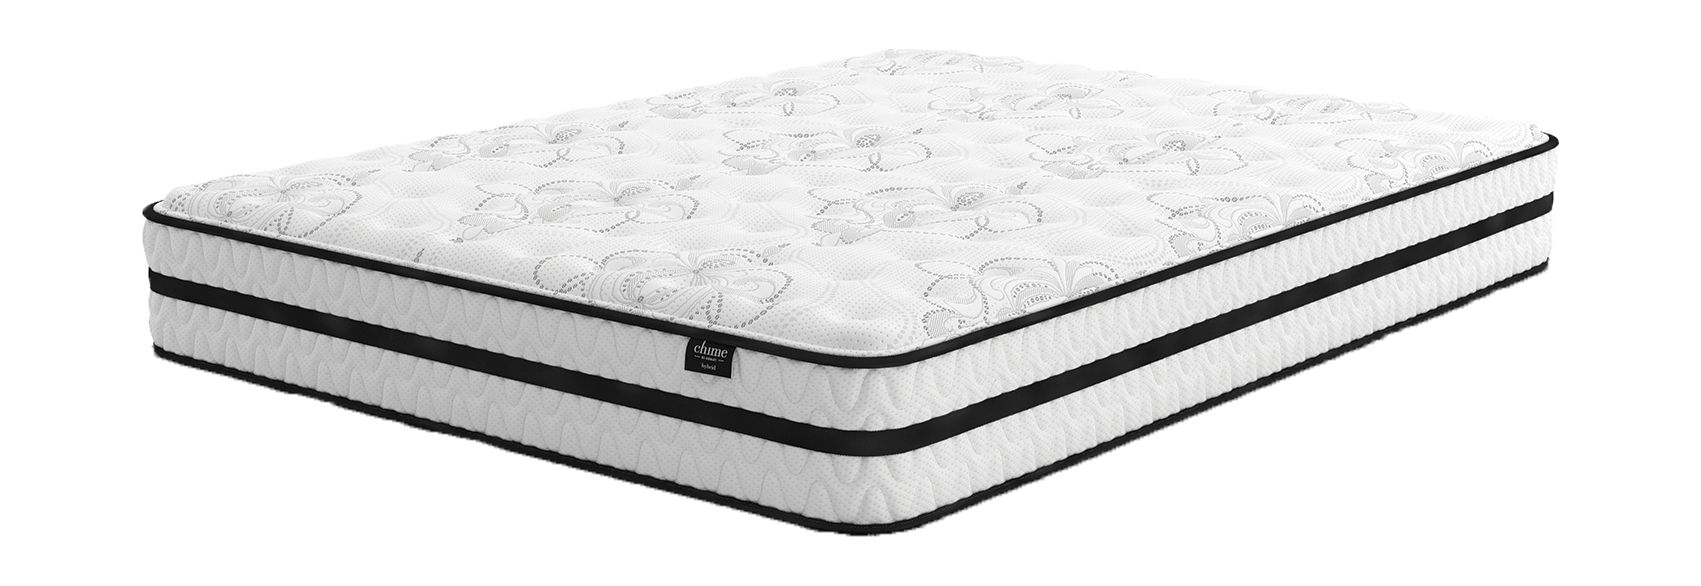 chime 10 inch hybrid foam mattress reviews